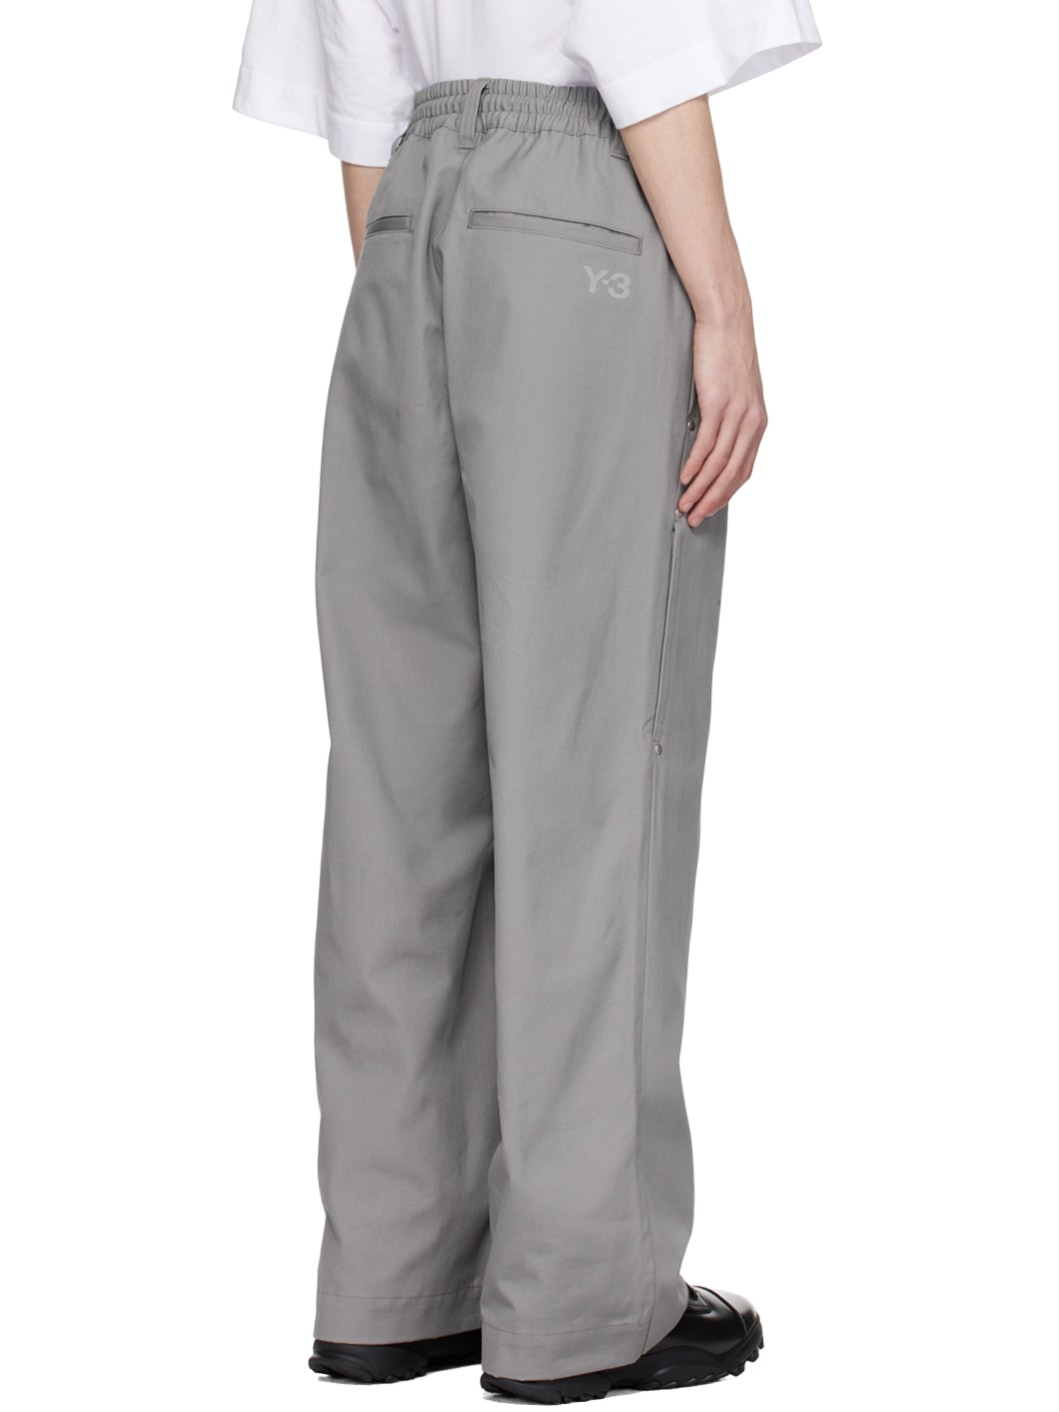 Gray Workwear Trousers - 3